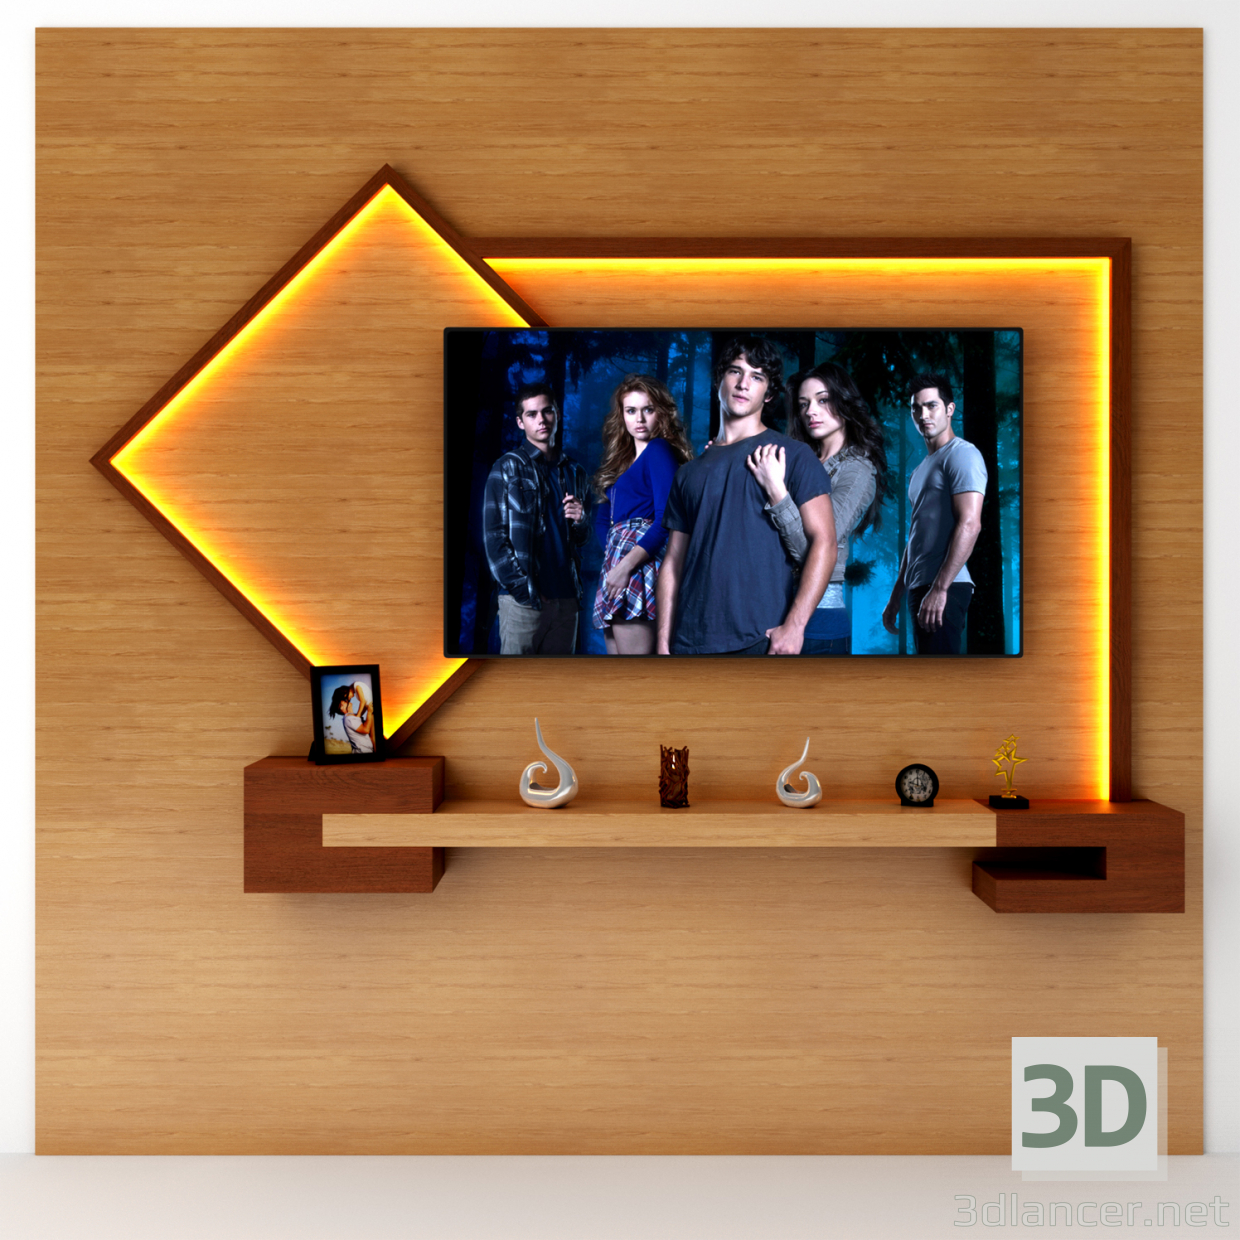 Polka tv 3D-Modell kaufen - Rendern